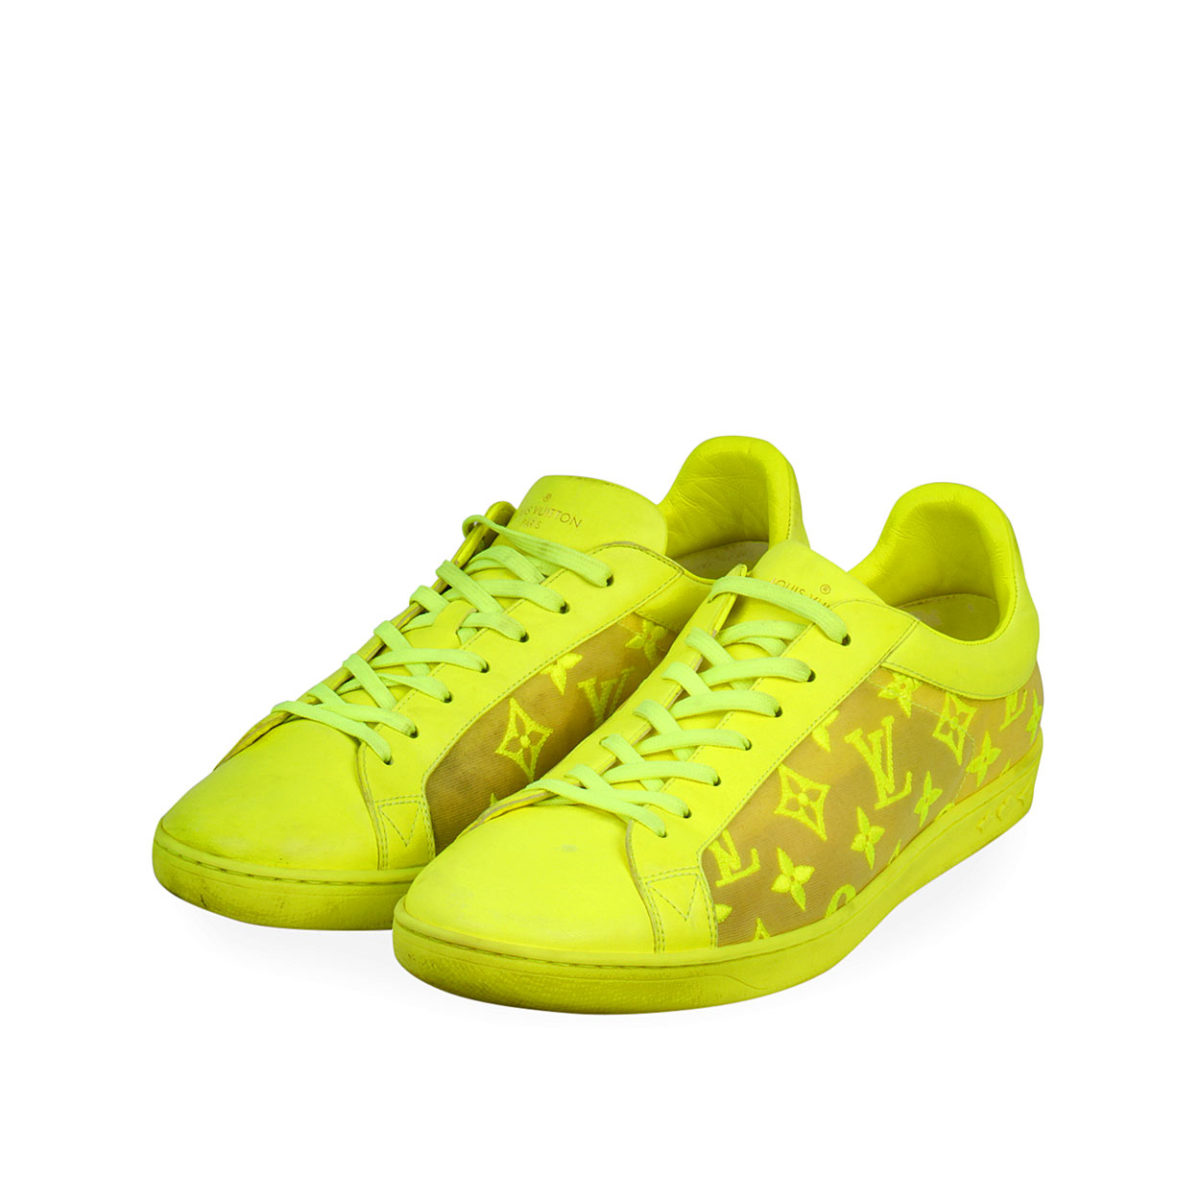 louis vuitton yellow sneakers